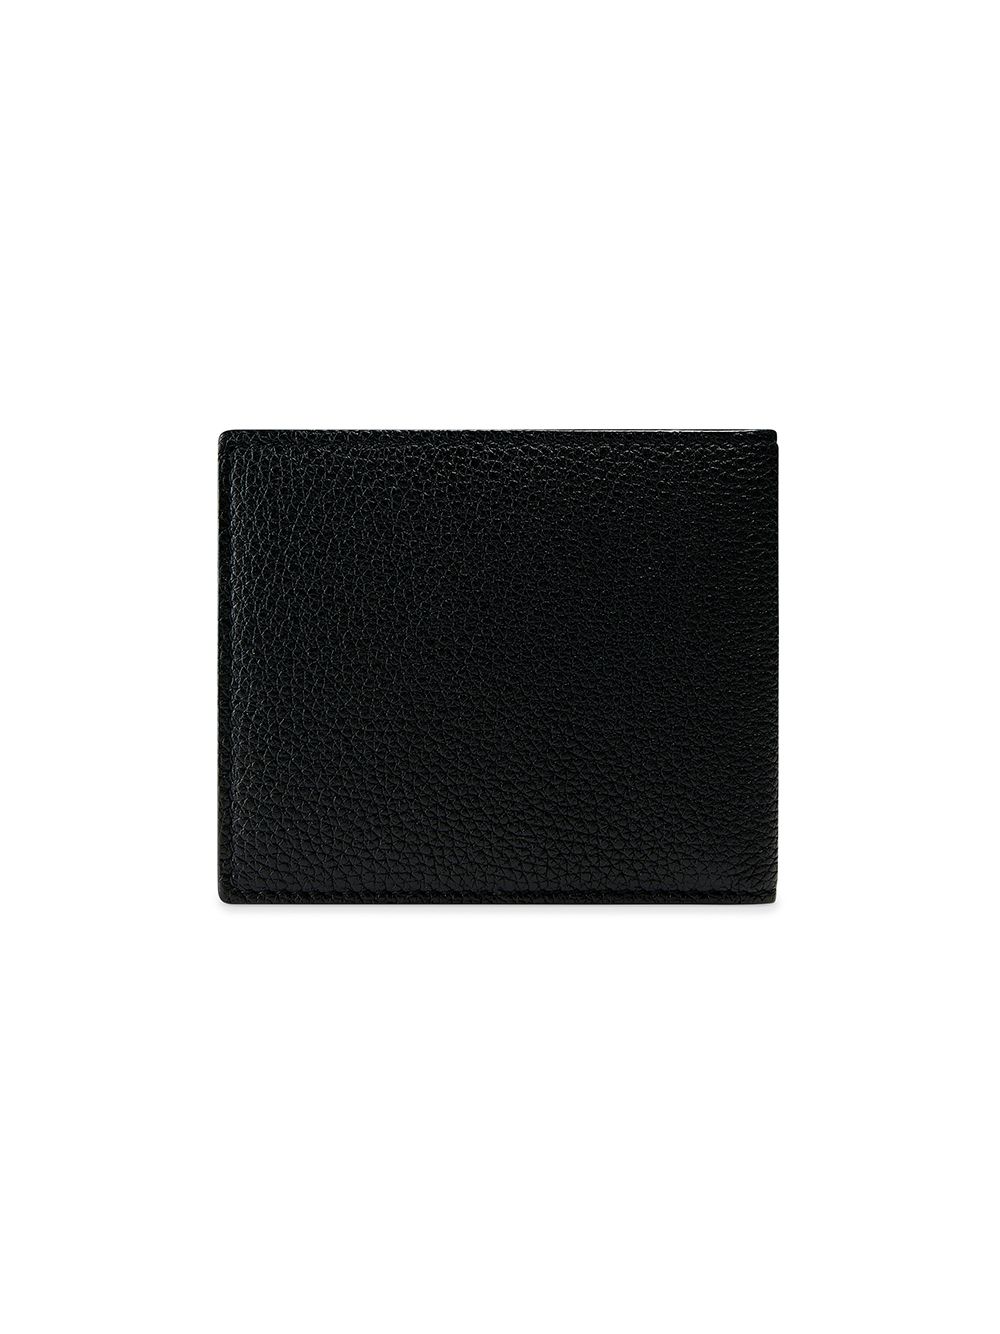 Gucci Gucci Print Leather Coin Wallet - Farfetch